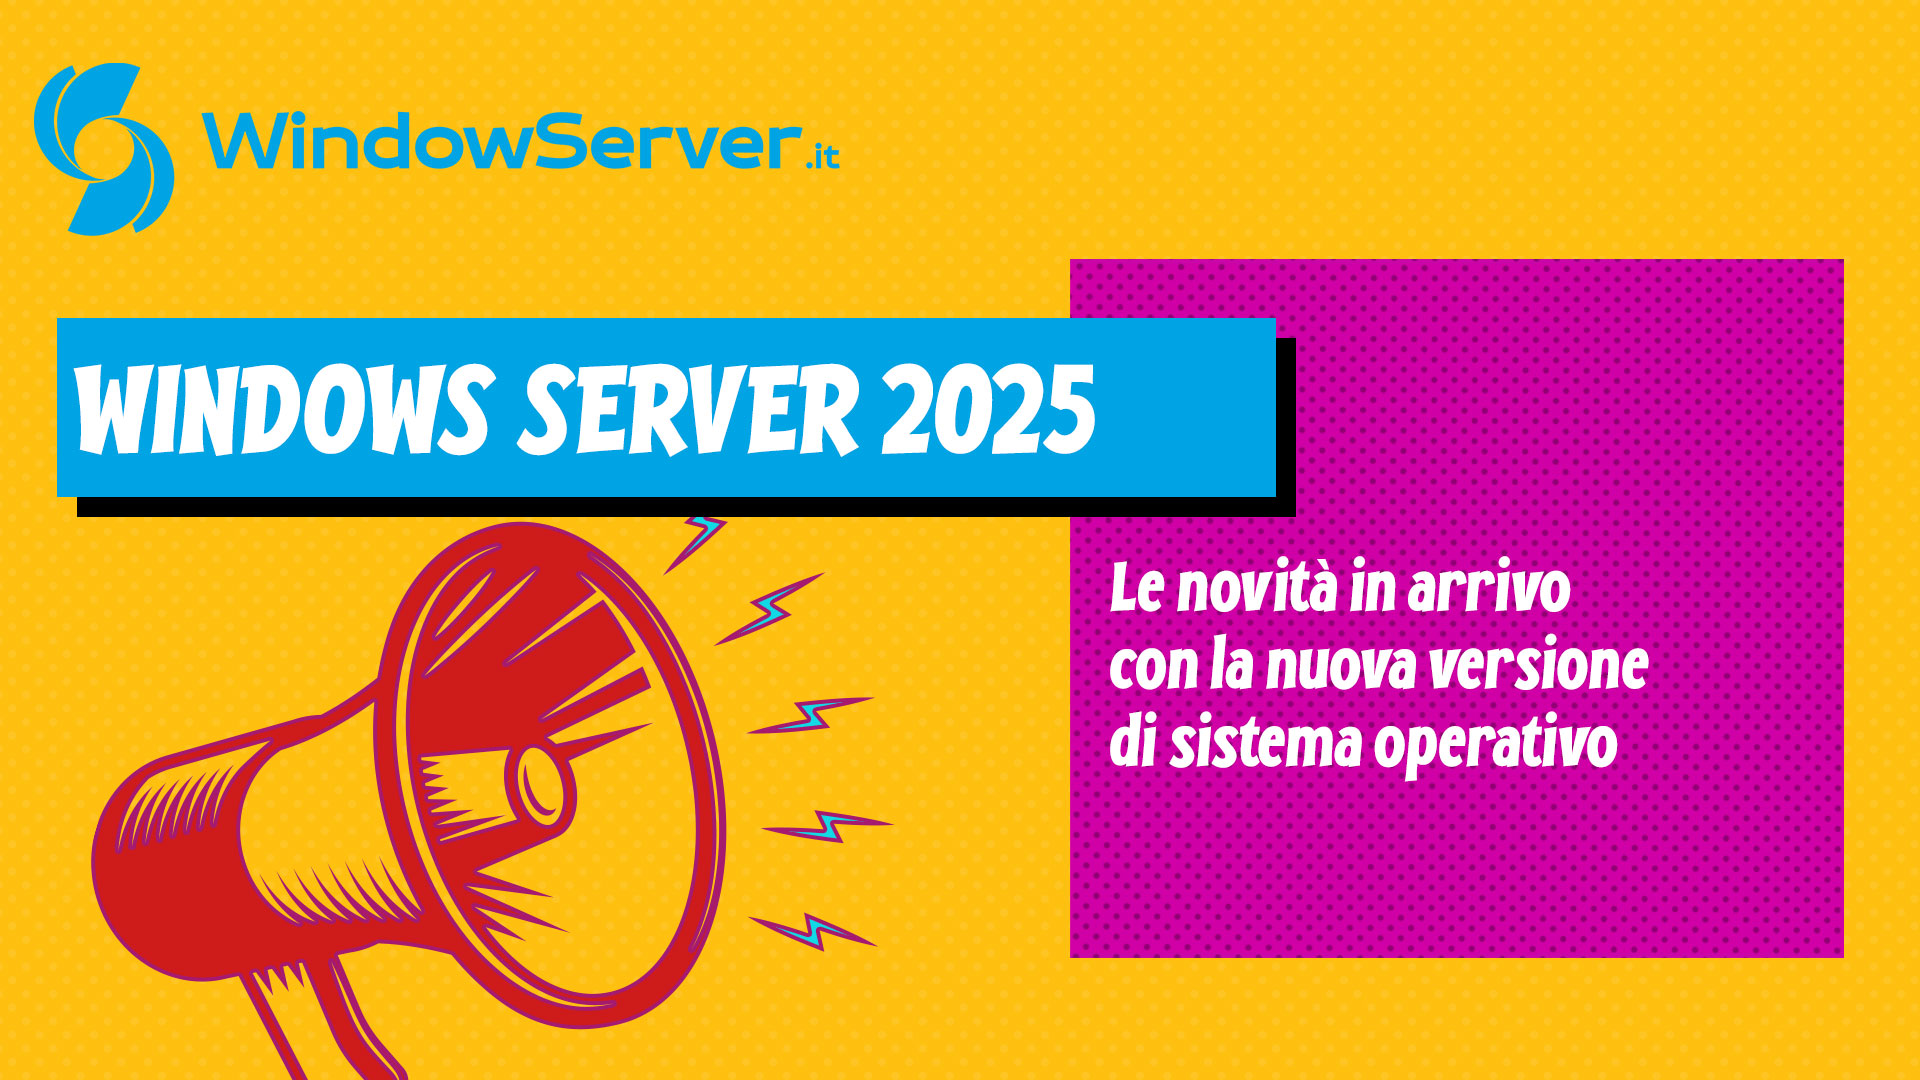 Windows Server 2025 What's New